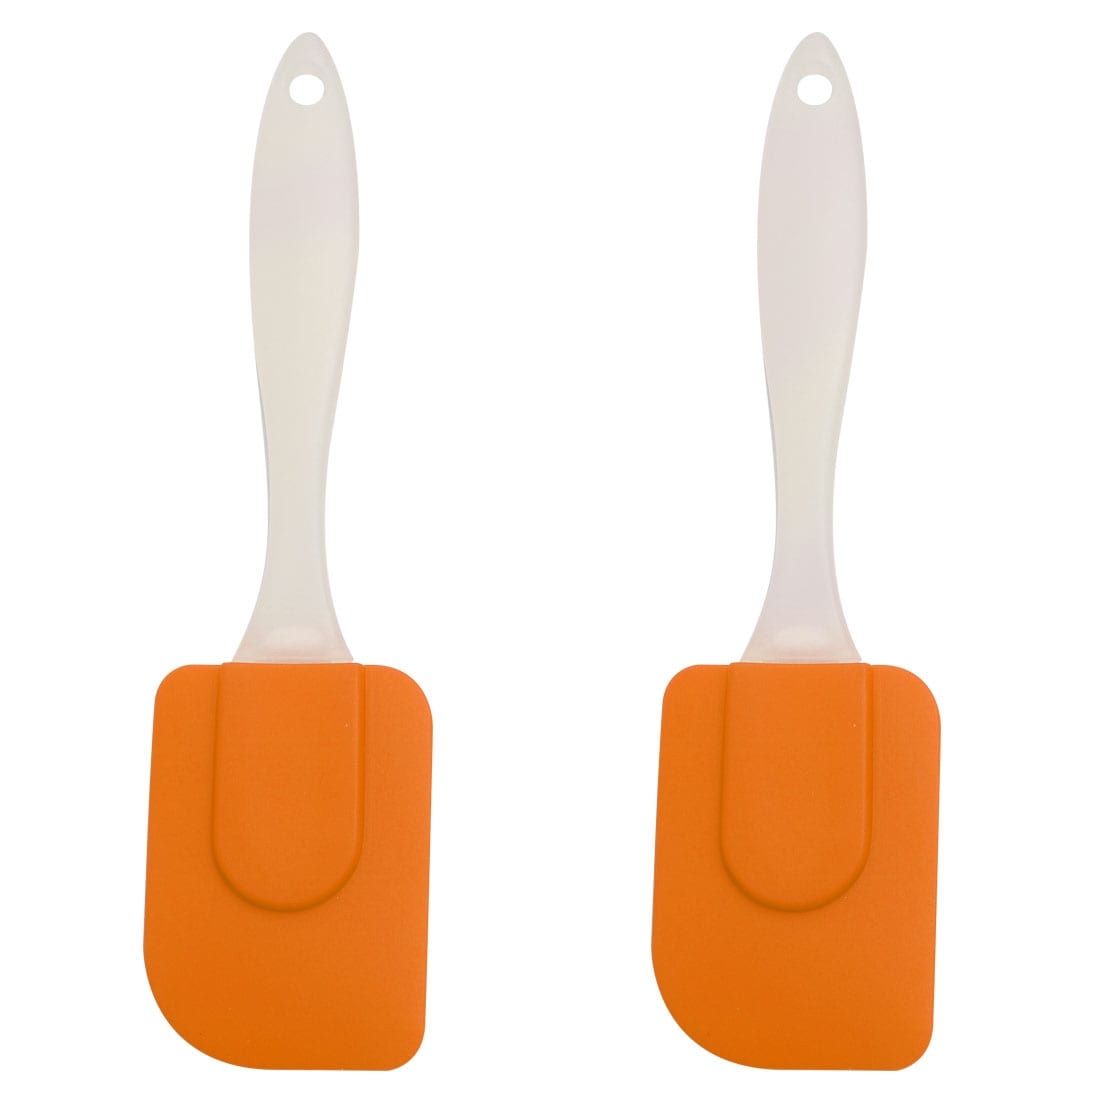 https://ak1.ostkcdn.com/images/products/is/images/direct/3b011fa5e293f0b3a1612da80a2eece9fce9084b/2-Pcs-Flexible-Silicone-Spatulas-Heat-Resistant-Non-scratch-Kitchen-Turner-Non-Sticky-Spatula-for-Kitchen-Orange.jpg